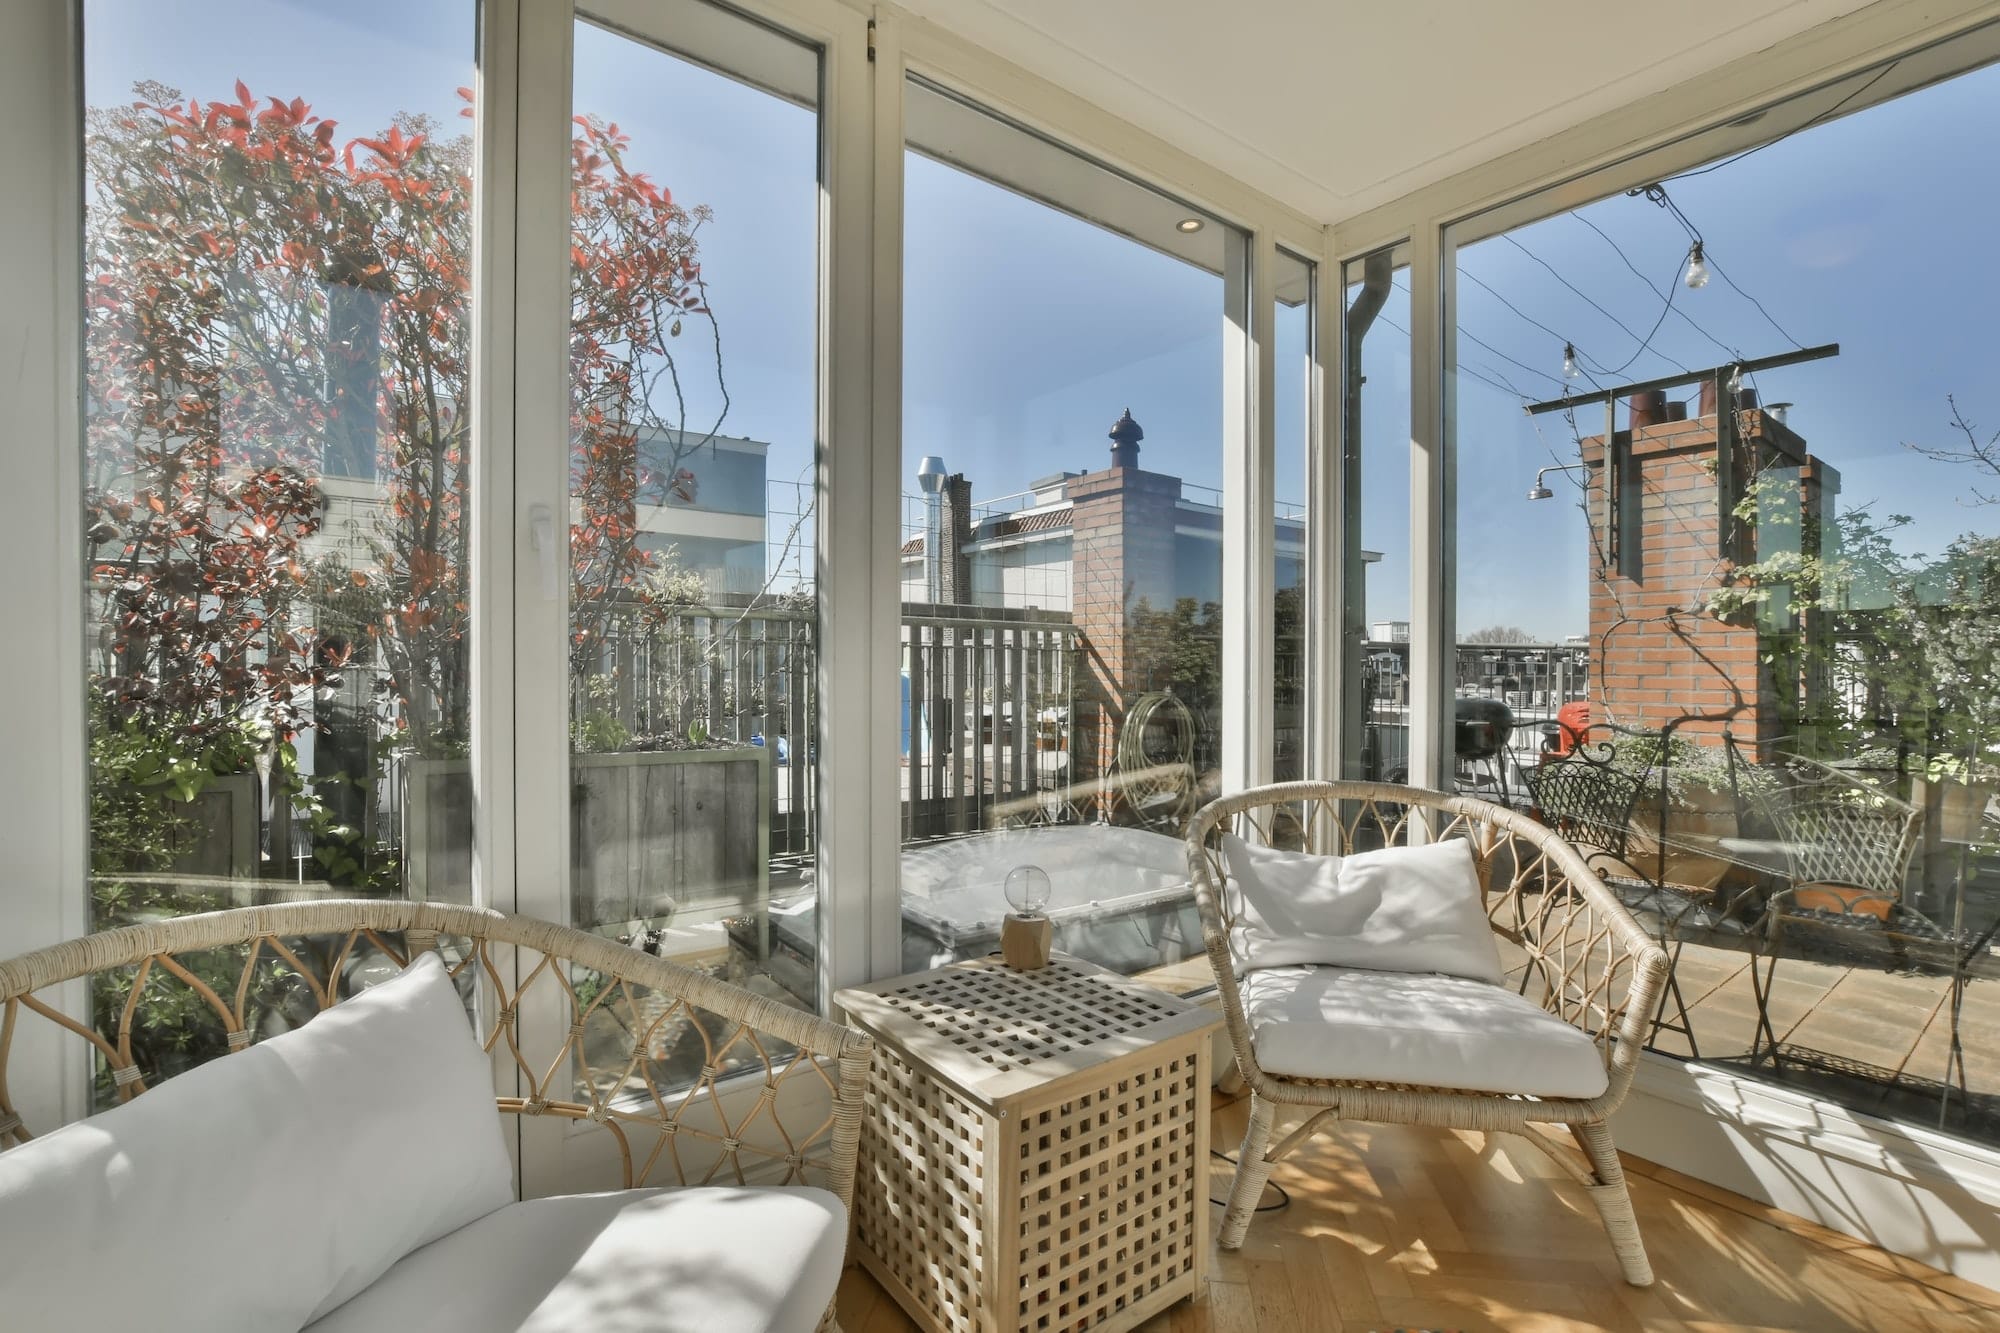 Cozy covered veranda with panoramic windows